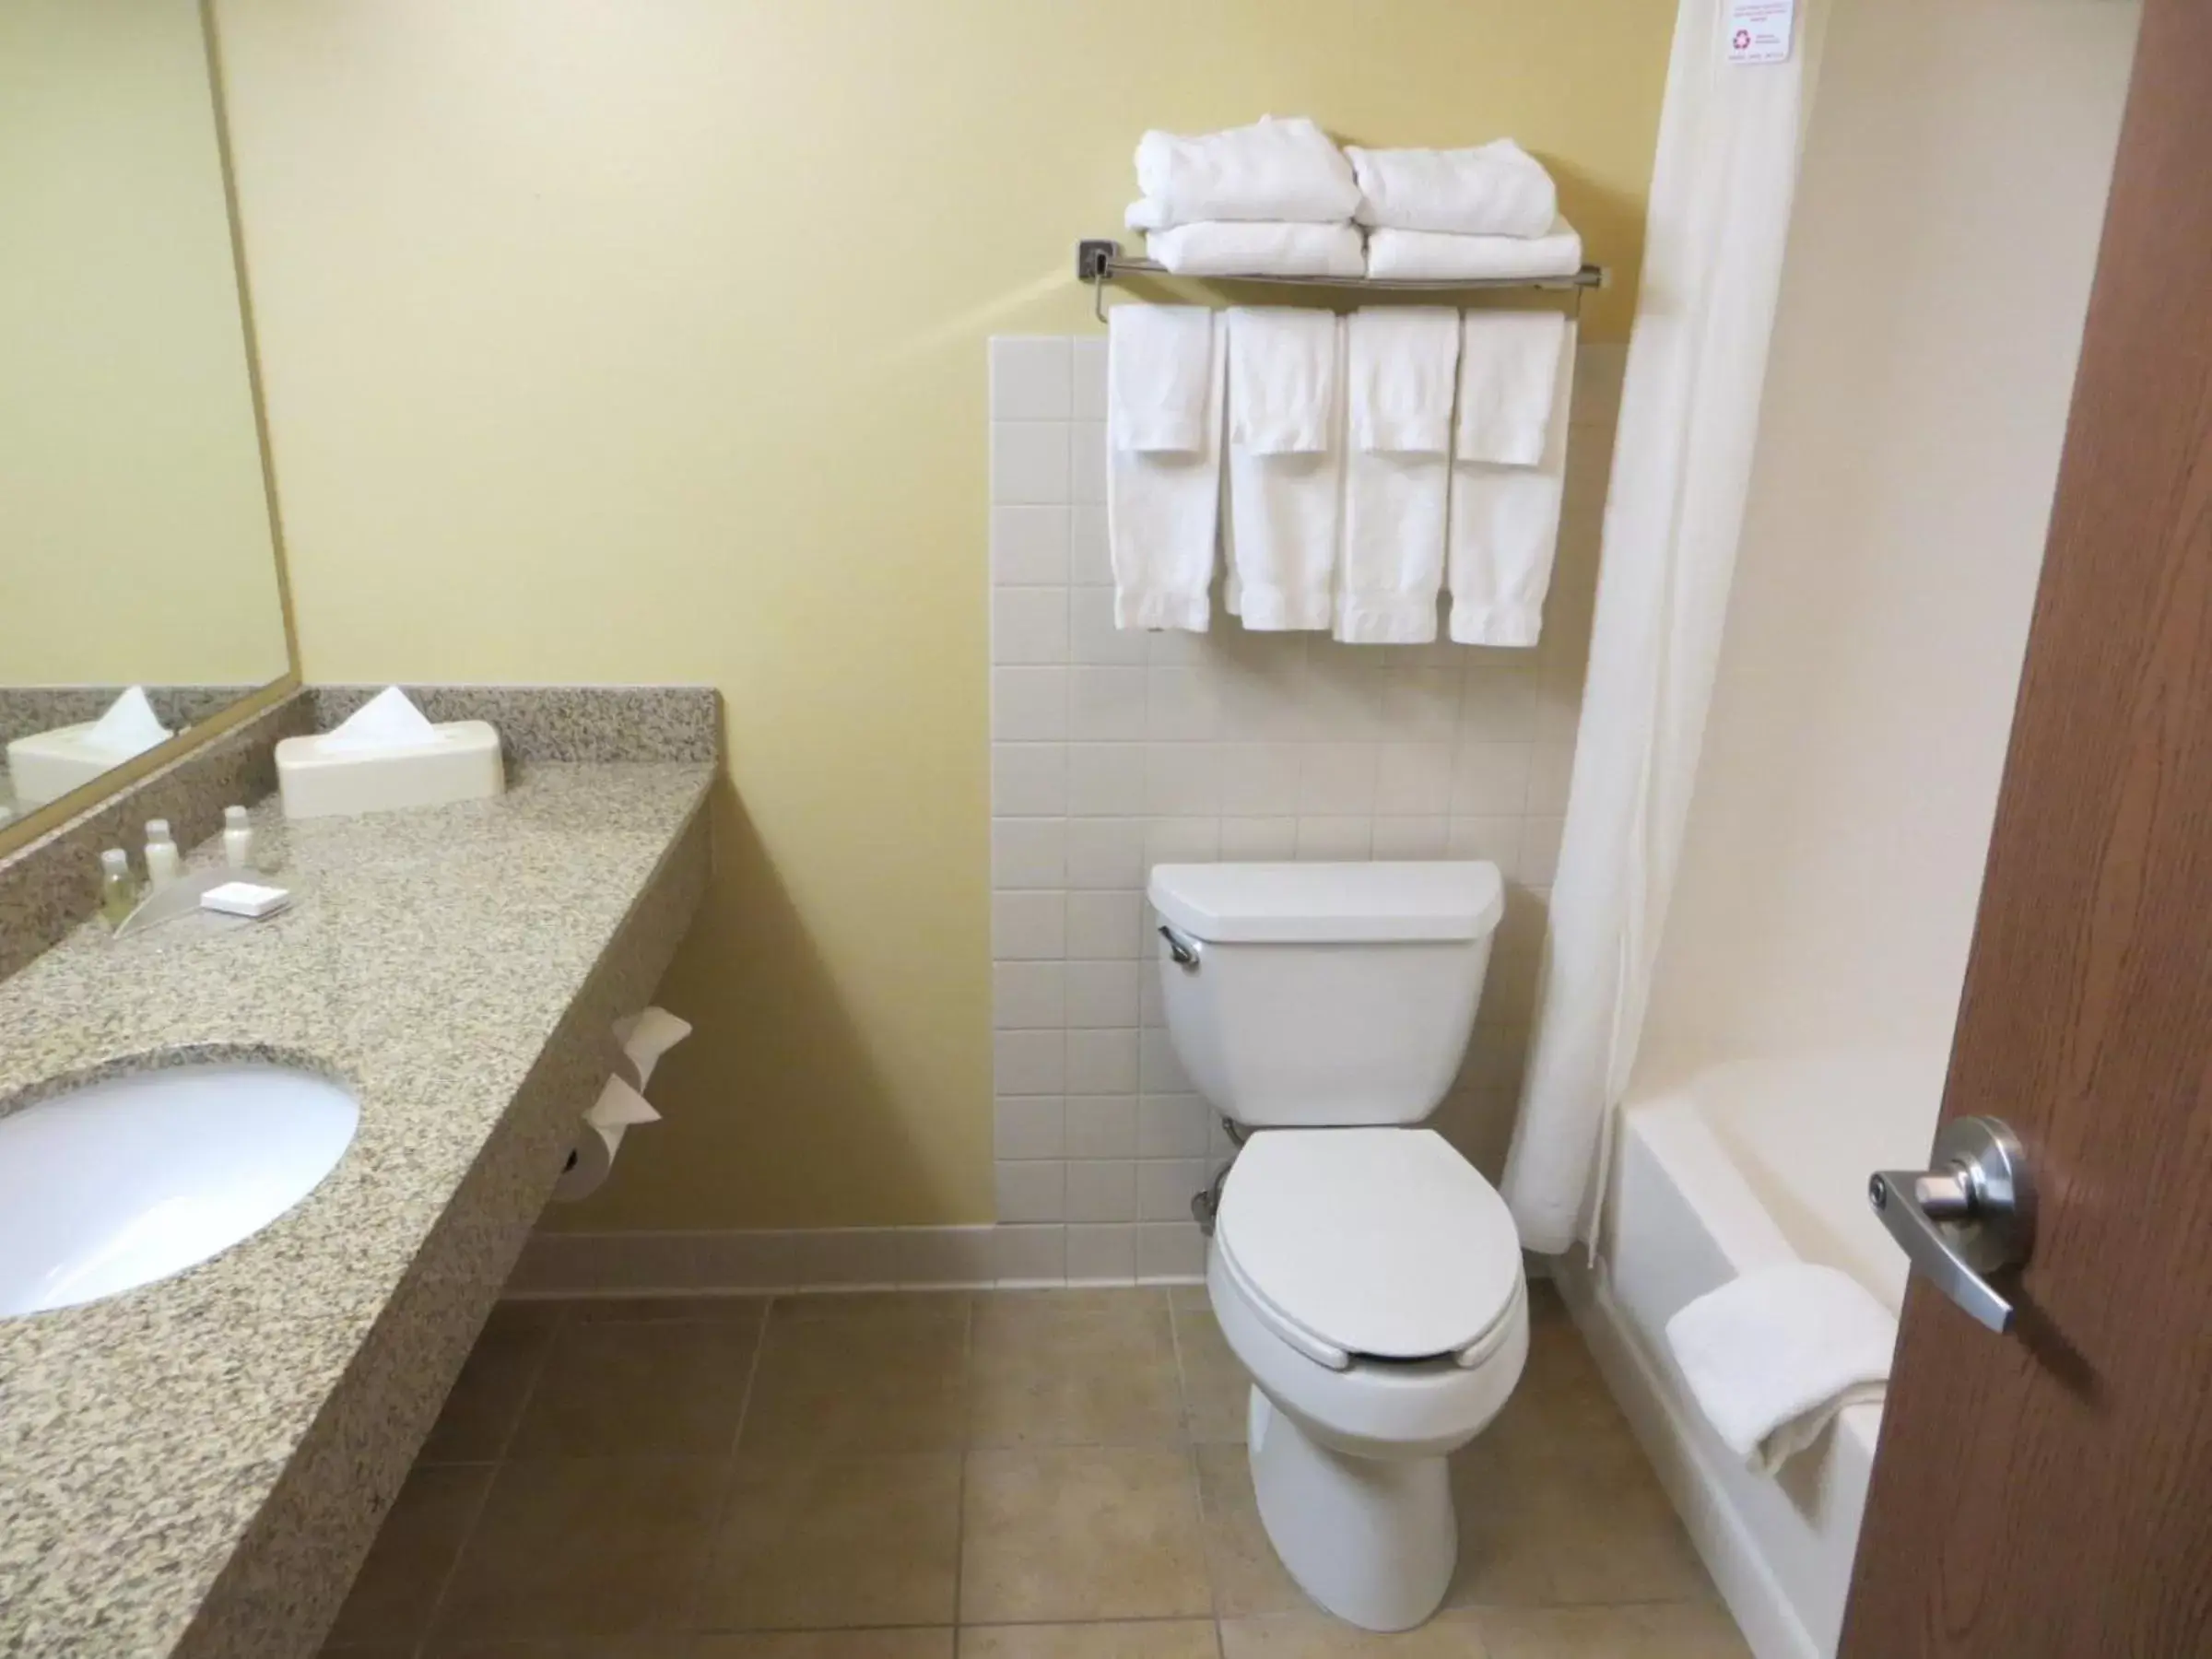 Bathroom in Canad Inns Destination Center Grand Forks